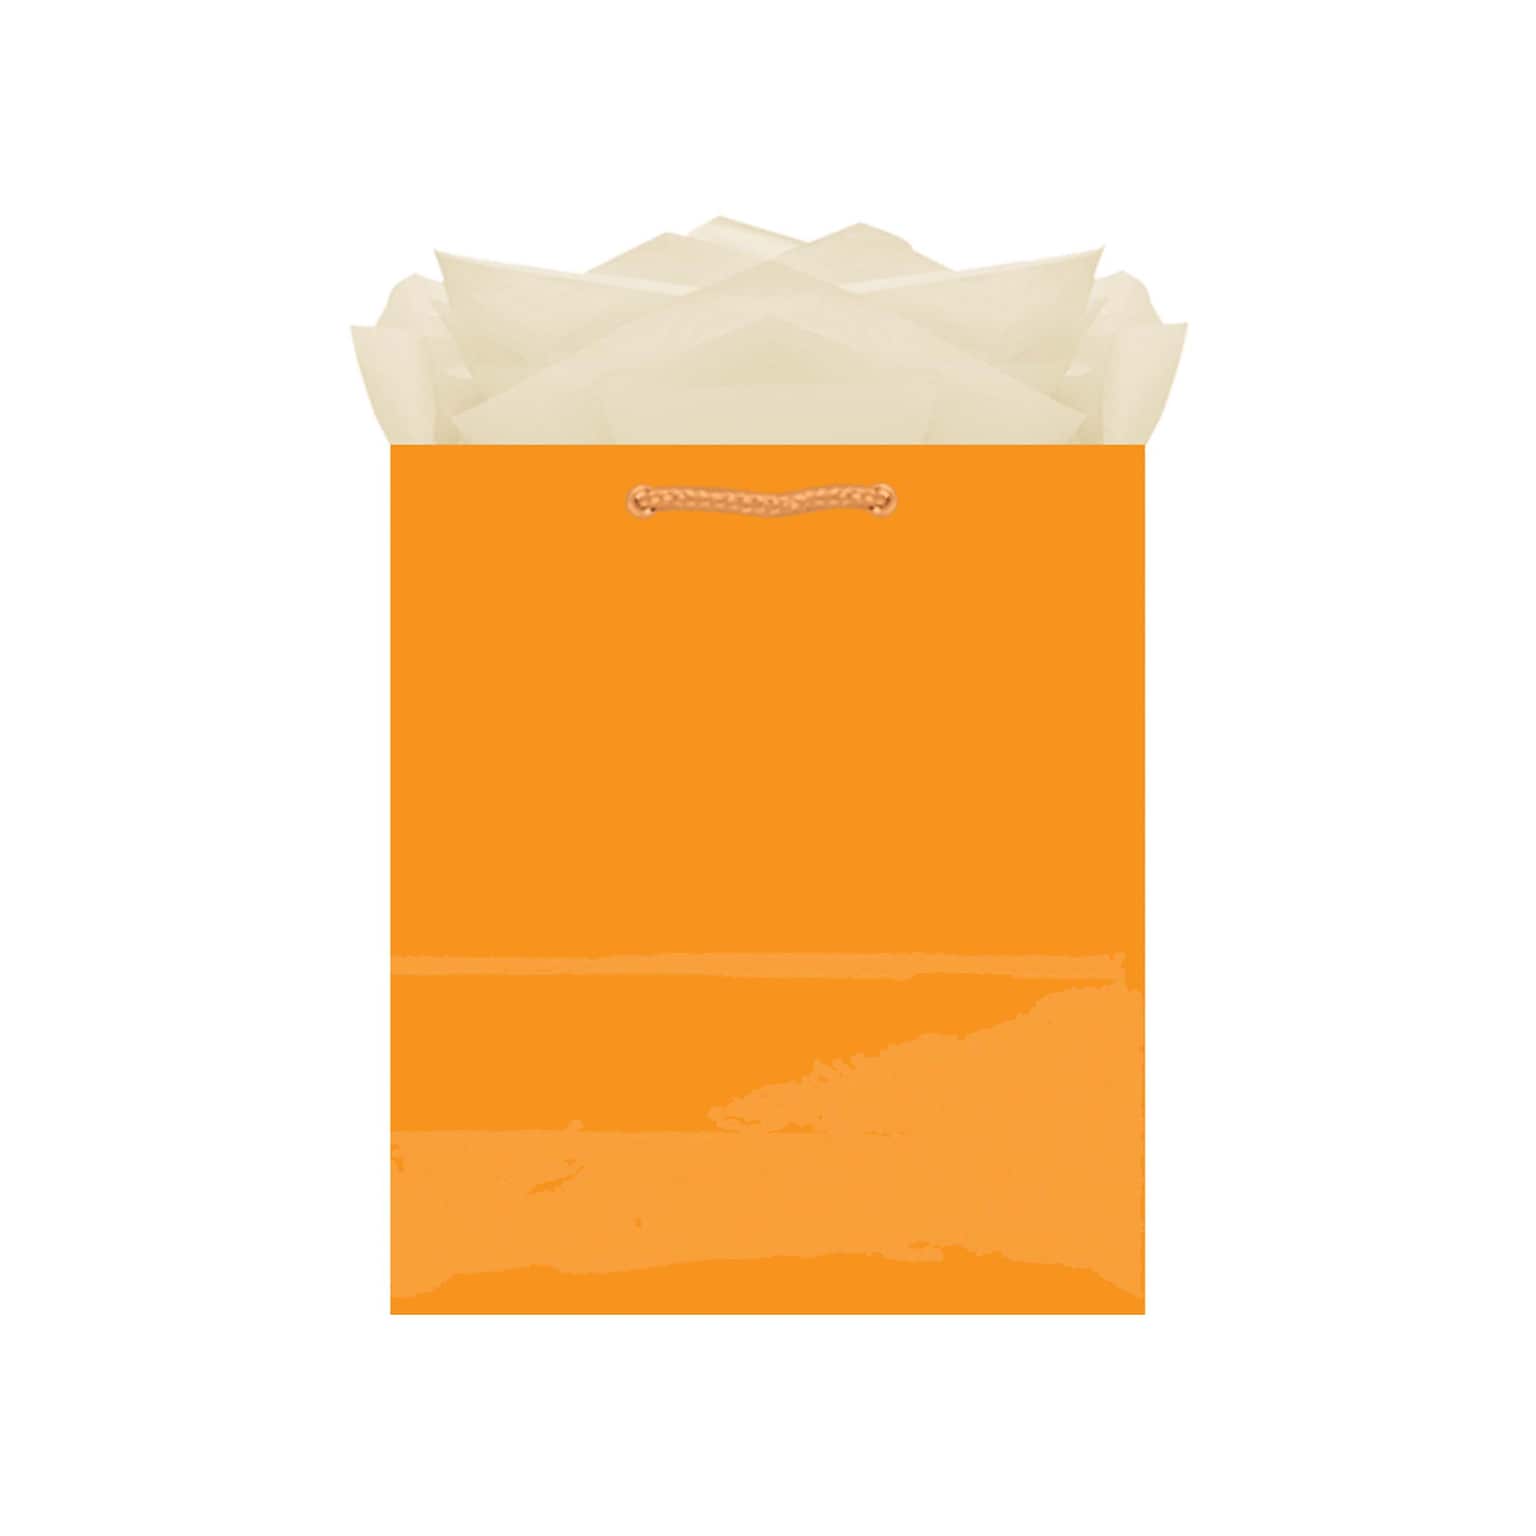 Amscan Glossy Paper Gift Bag, 9.5 x 8, Orange Peel, 10 Bags/Pack (47065.05)